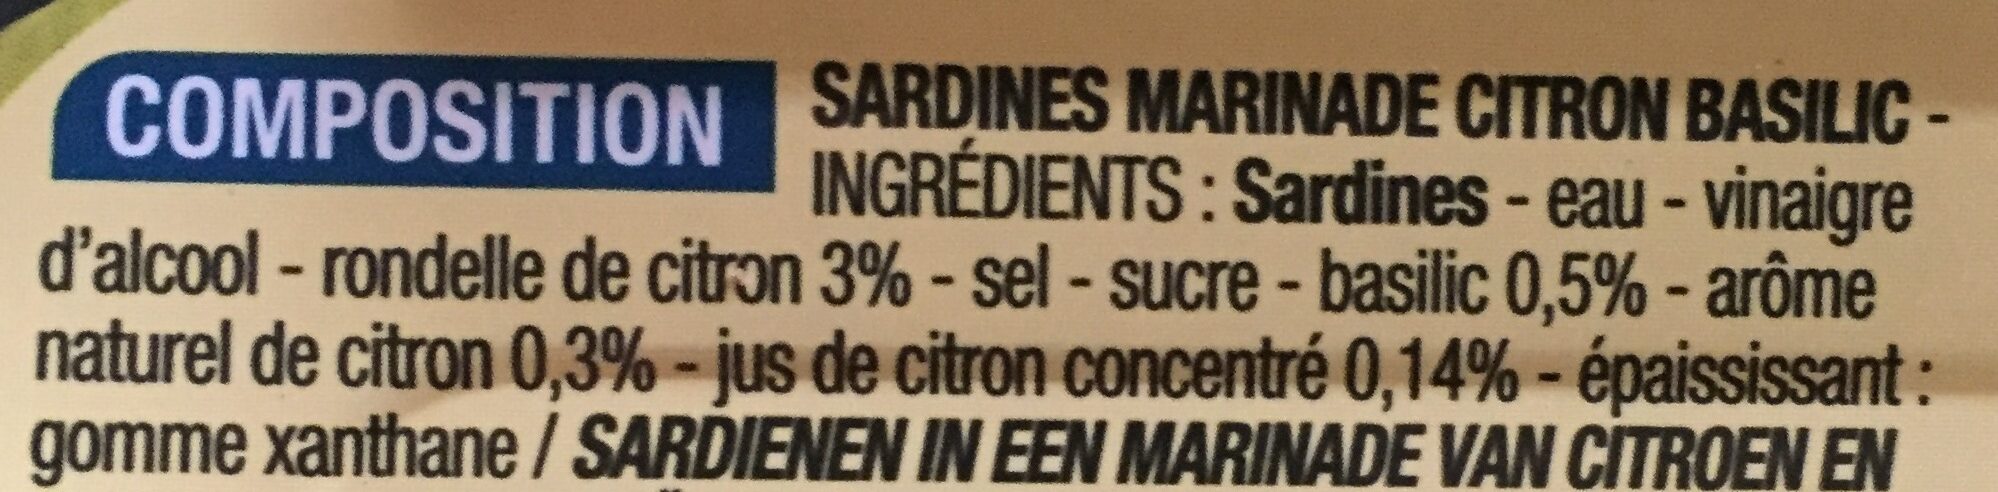 Sardines citron-basilic - Ingrédients